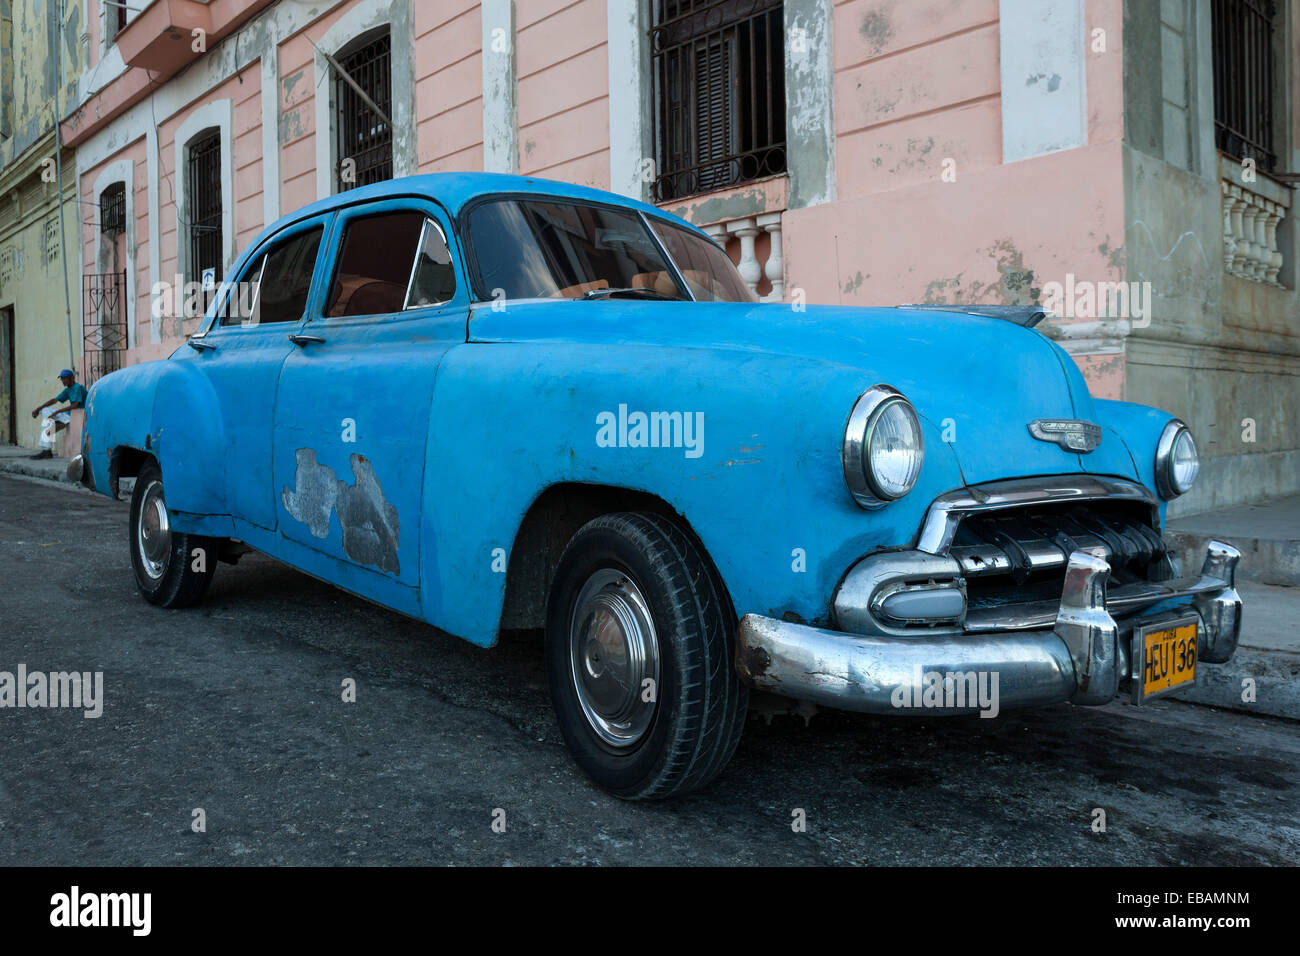 Vintage Chevrolet from the 1940s, Havana, Cuba Stock Photo